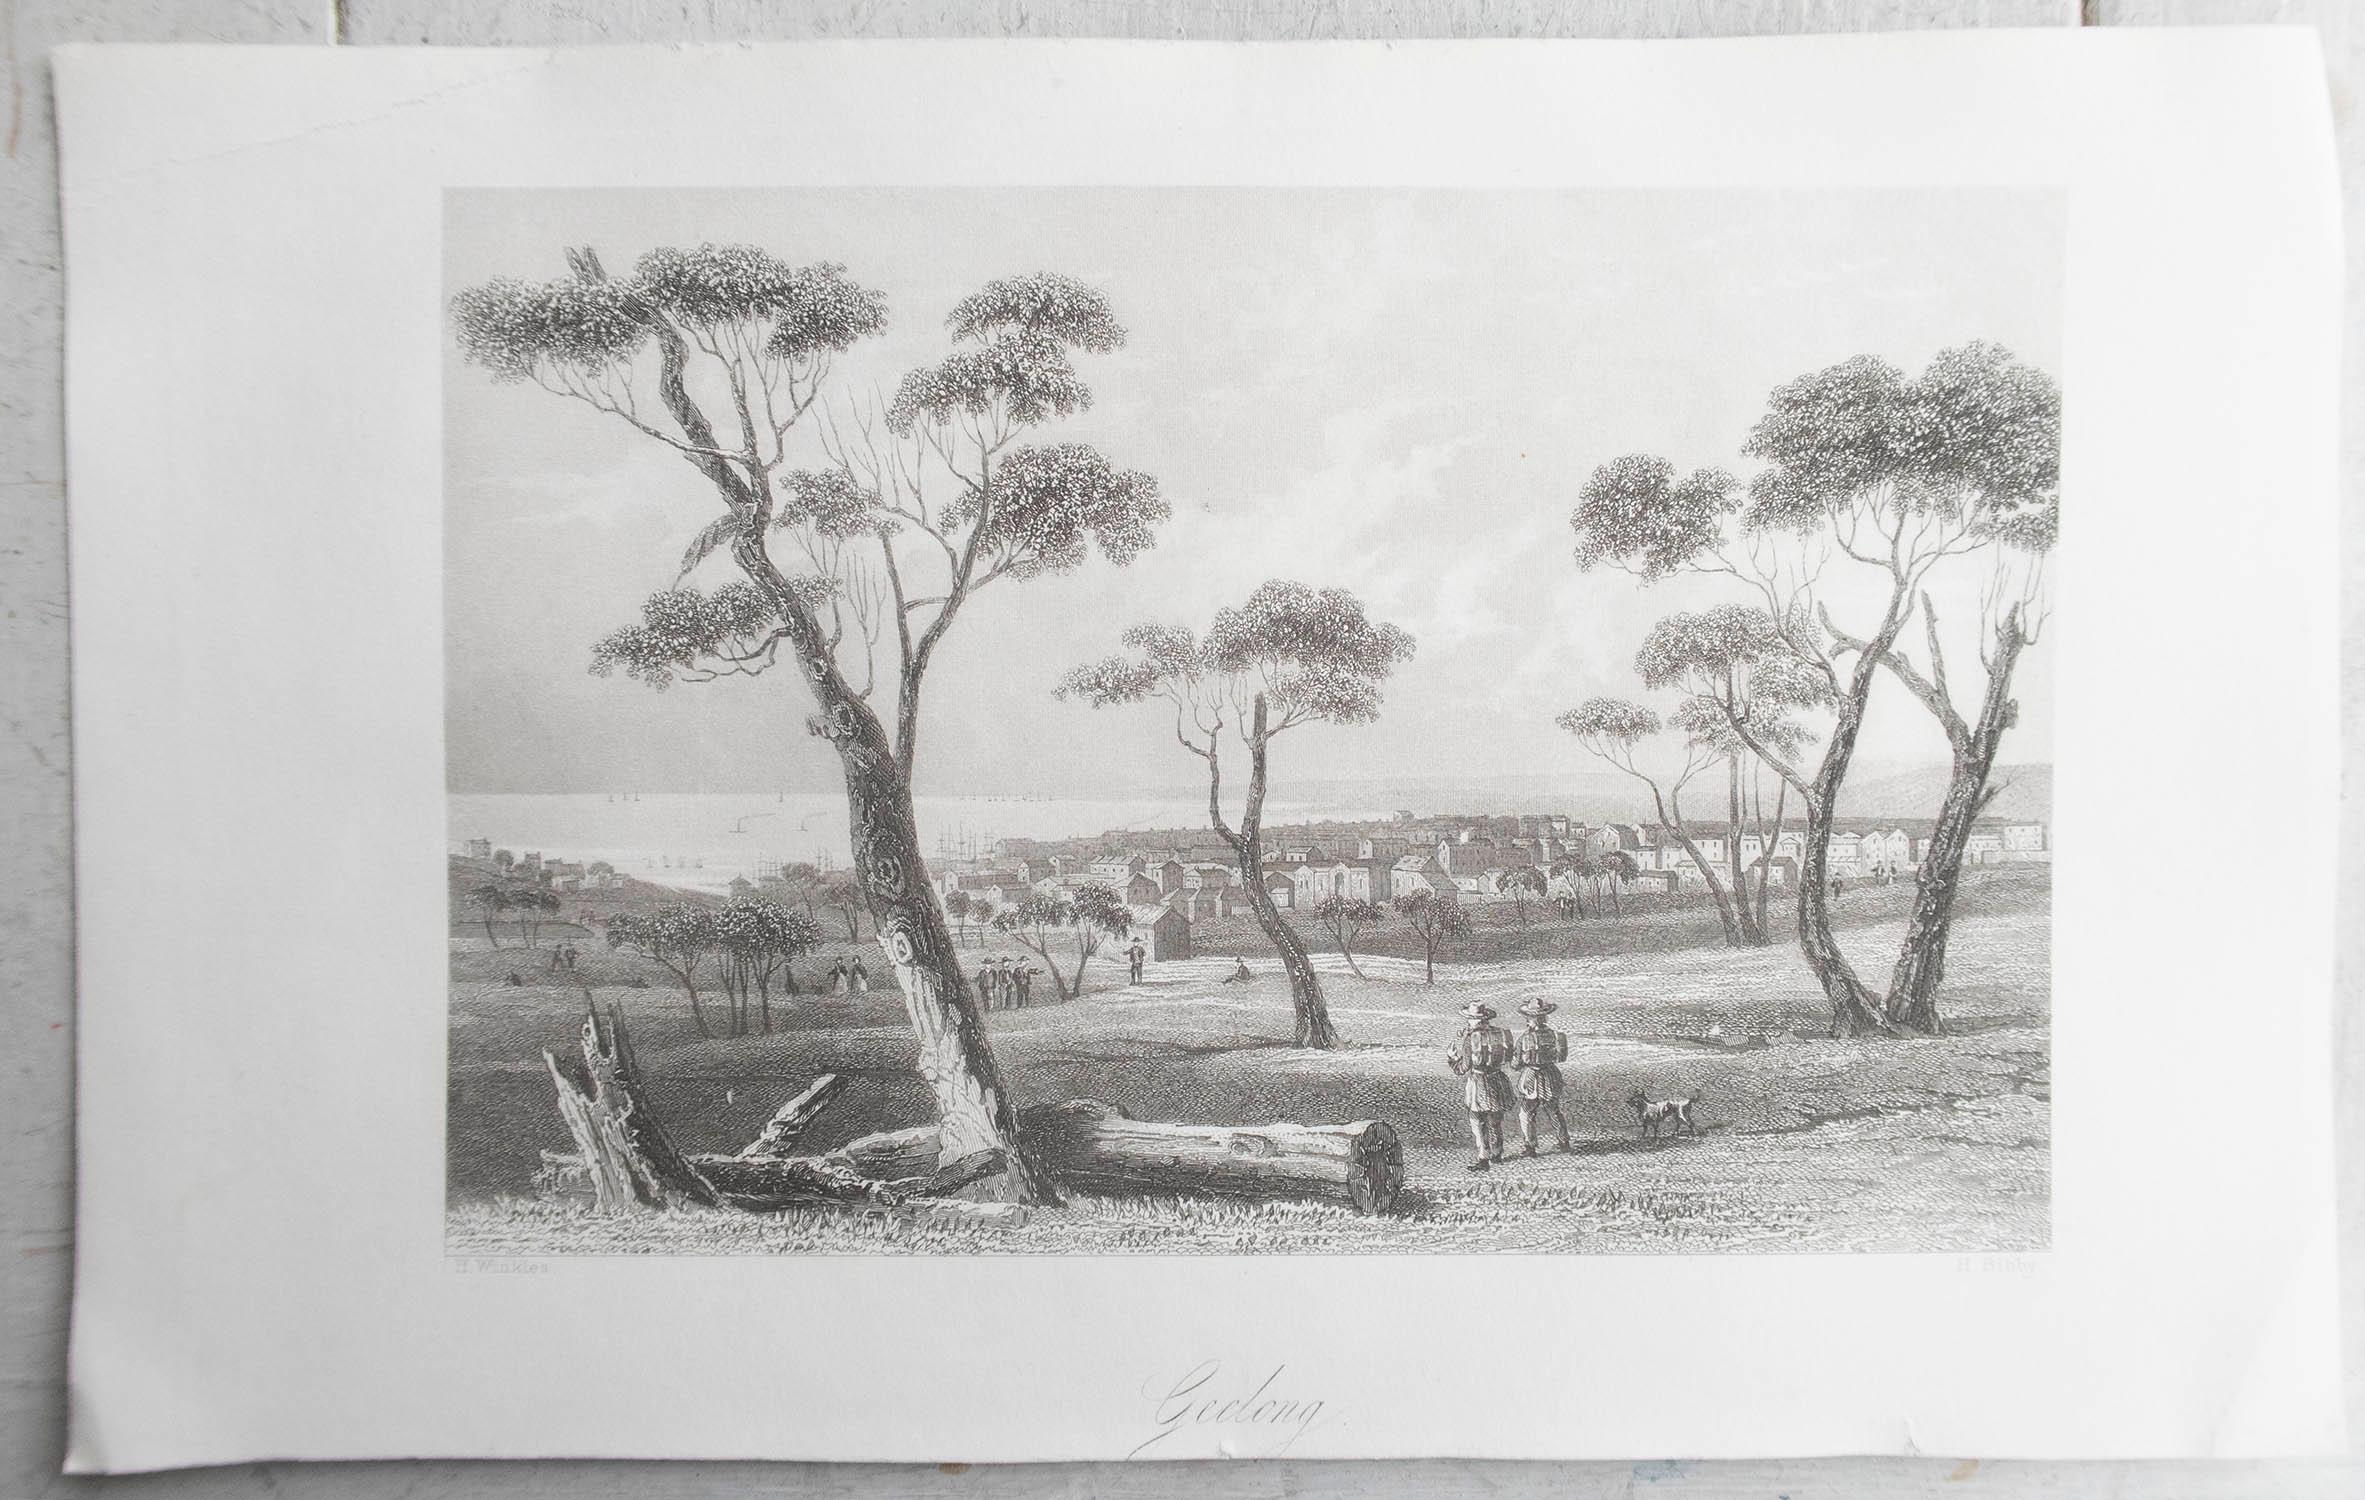 English Original Antique Print of Geelong, Australia, circa 1850